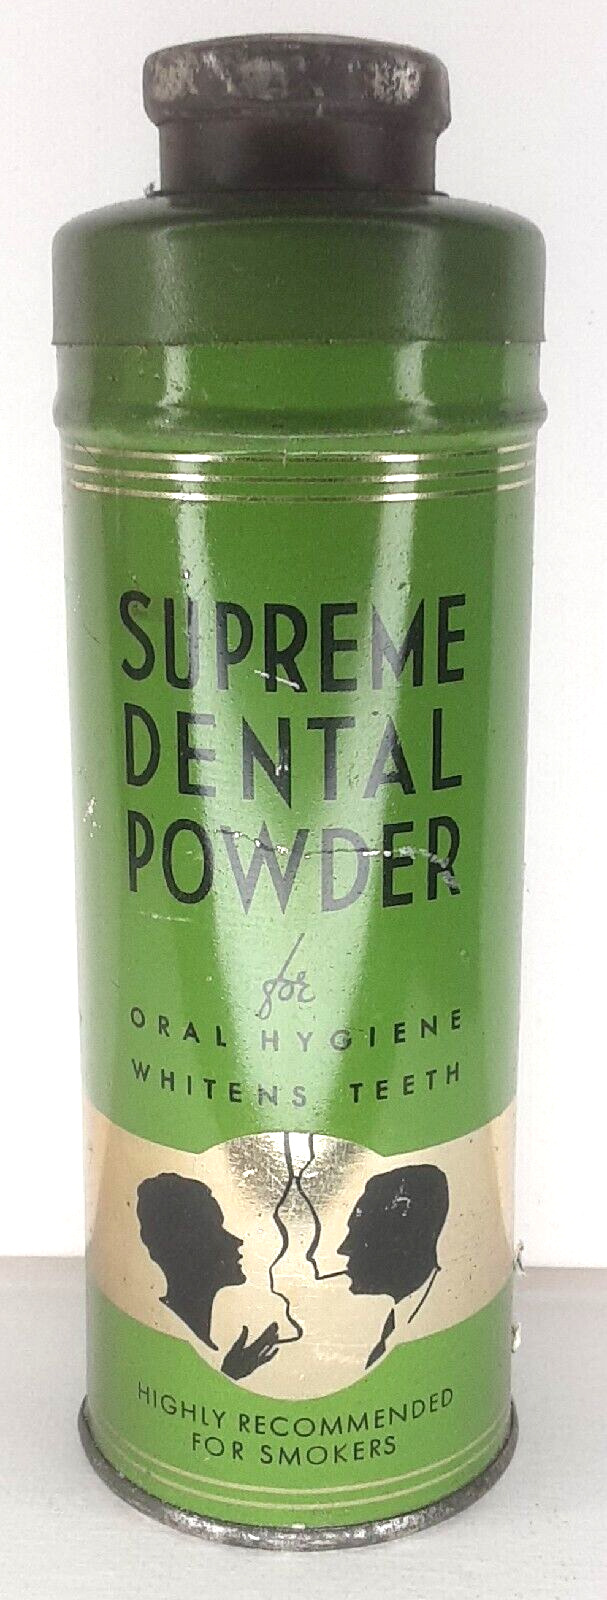 Dentifrice Supreme Dental Powder Original Tin Hygiene Labs Beaver Dam Wisconsin